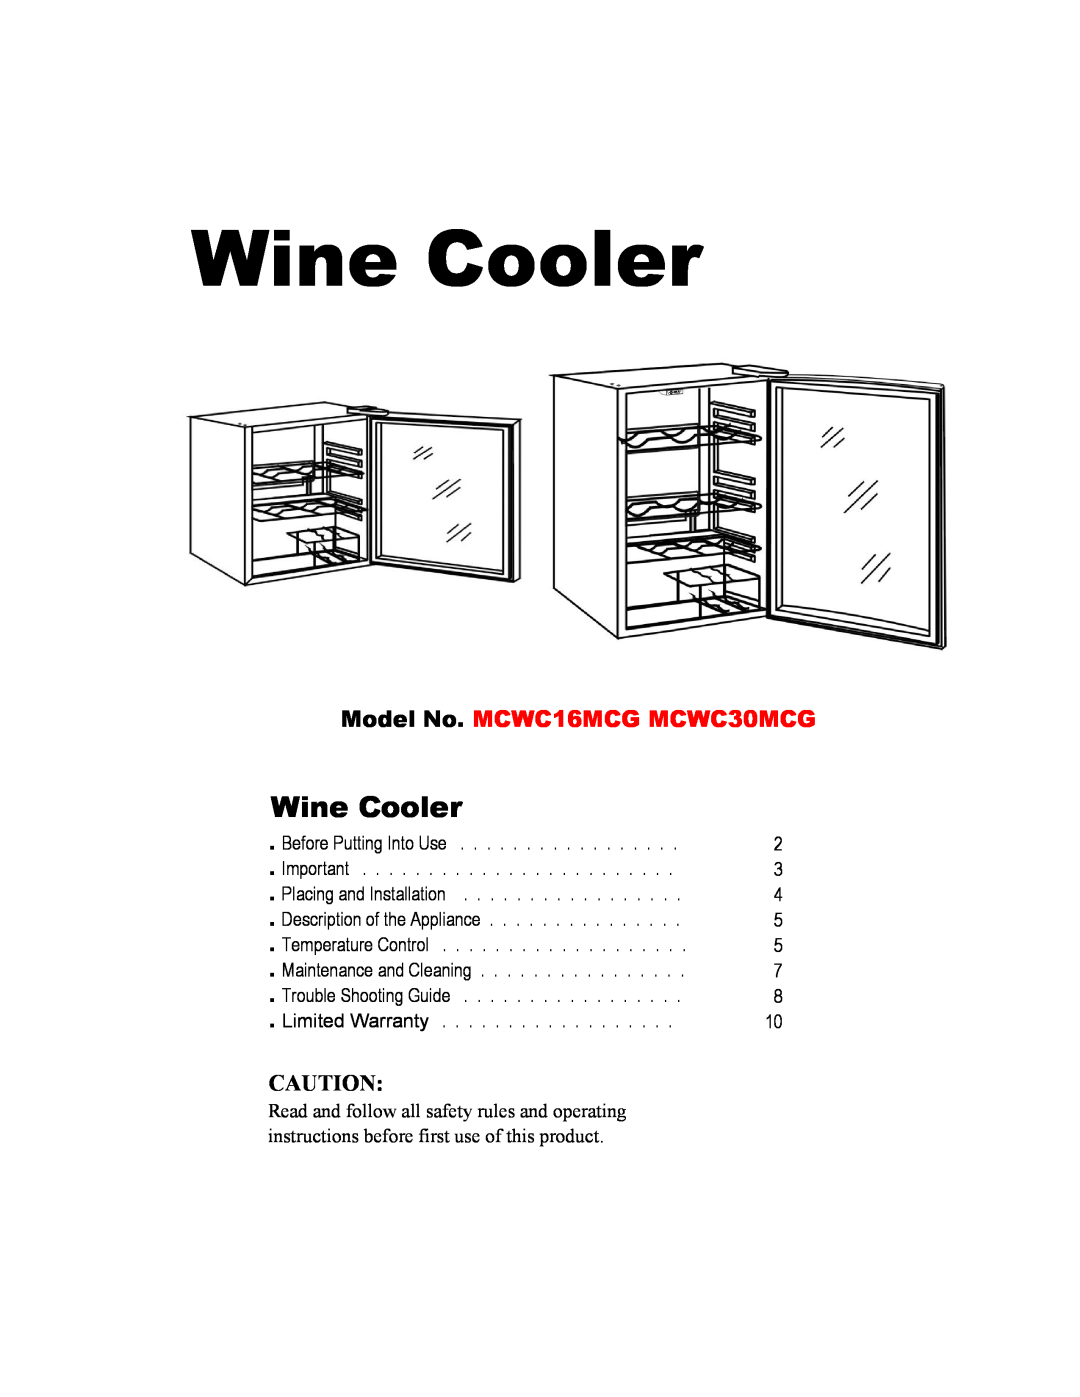 Magic Chef operating instructions Wine Cooler, Model No. MCWC16MCG MCWC30MCG 